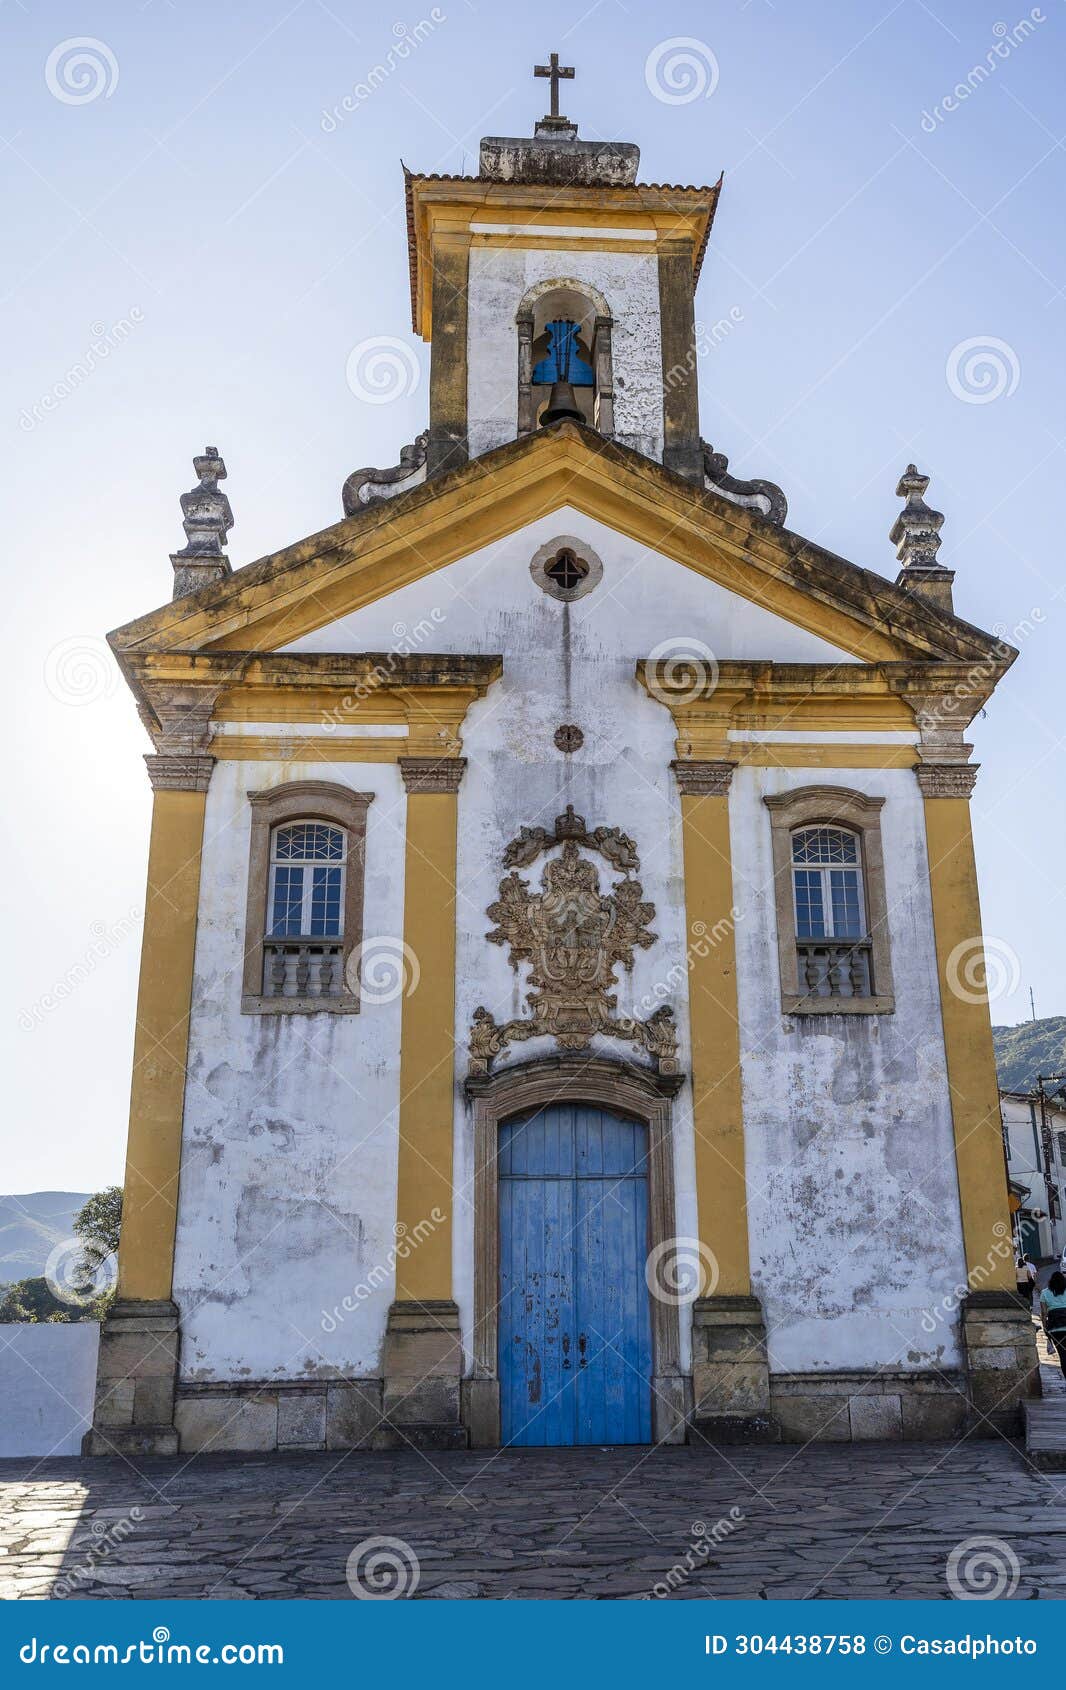 facade of the nossa senhora das merces church is a baroque style catholic church in ouro preto, minas gerais, brazil